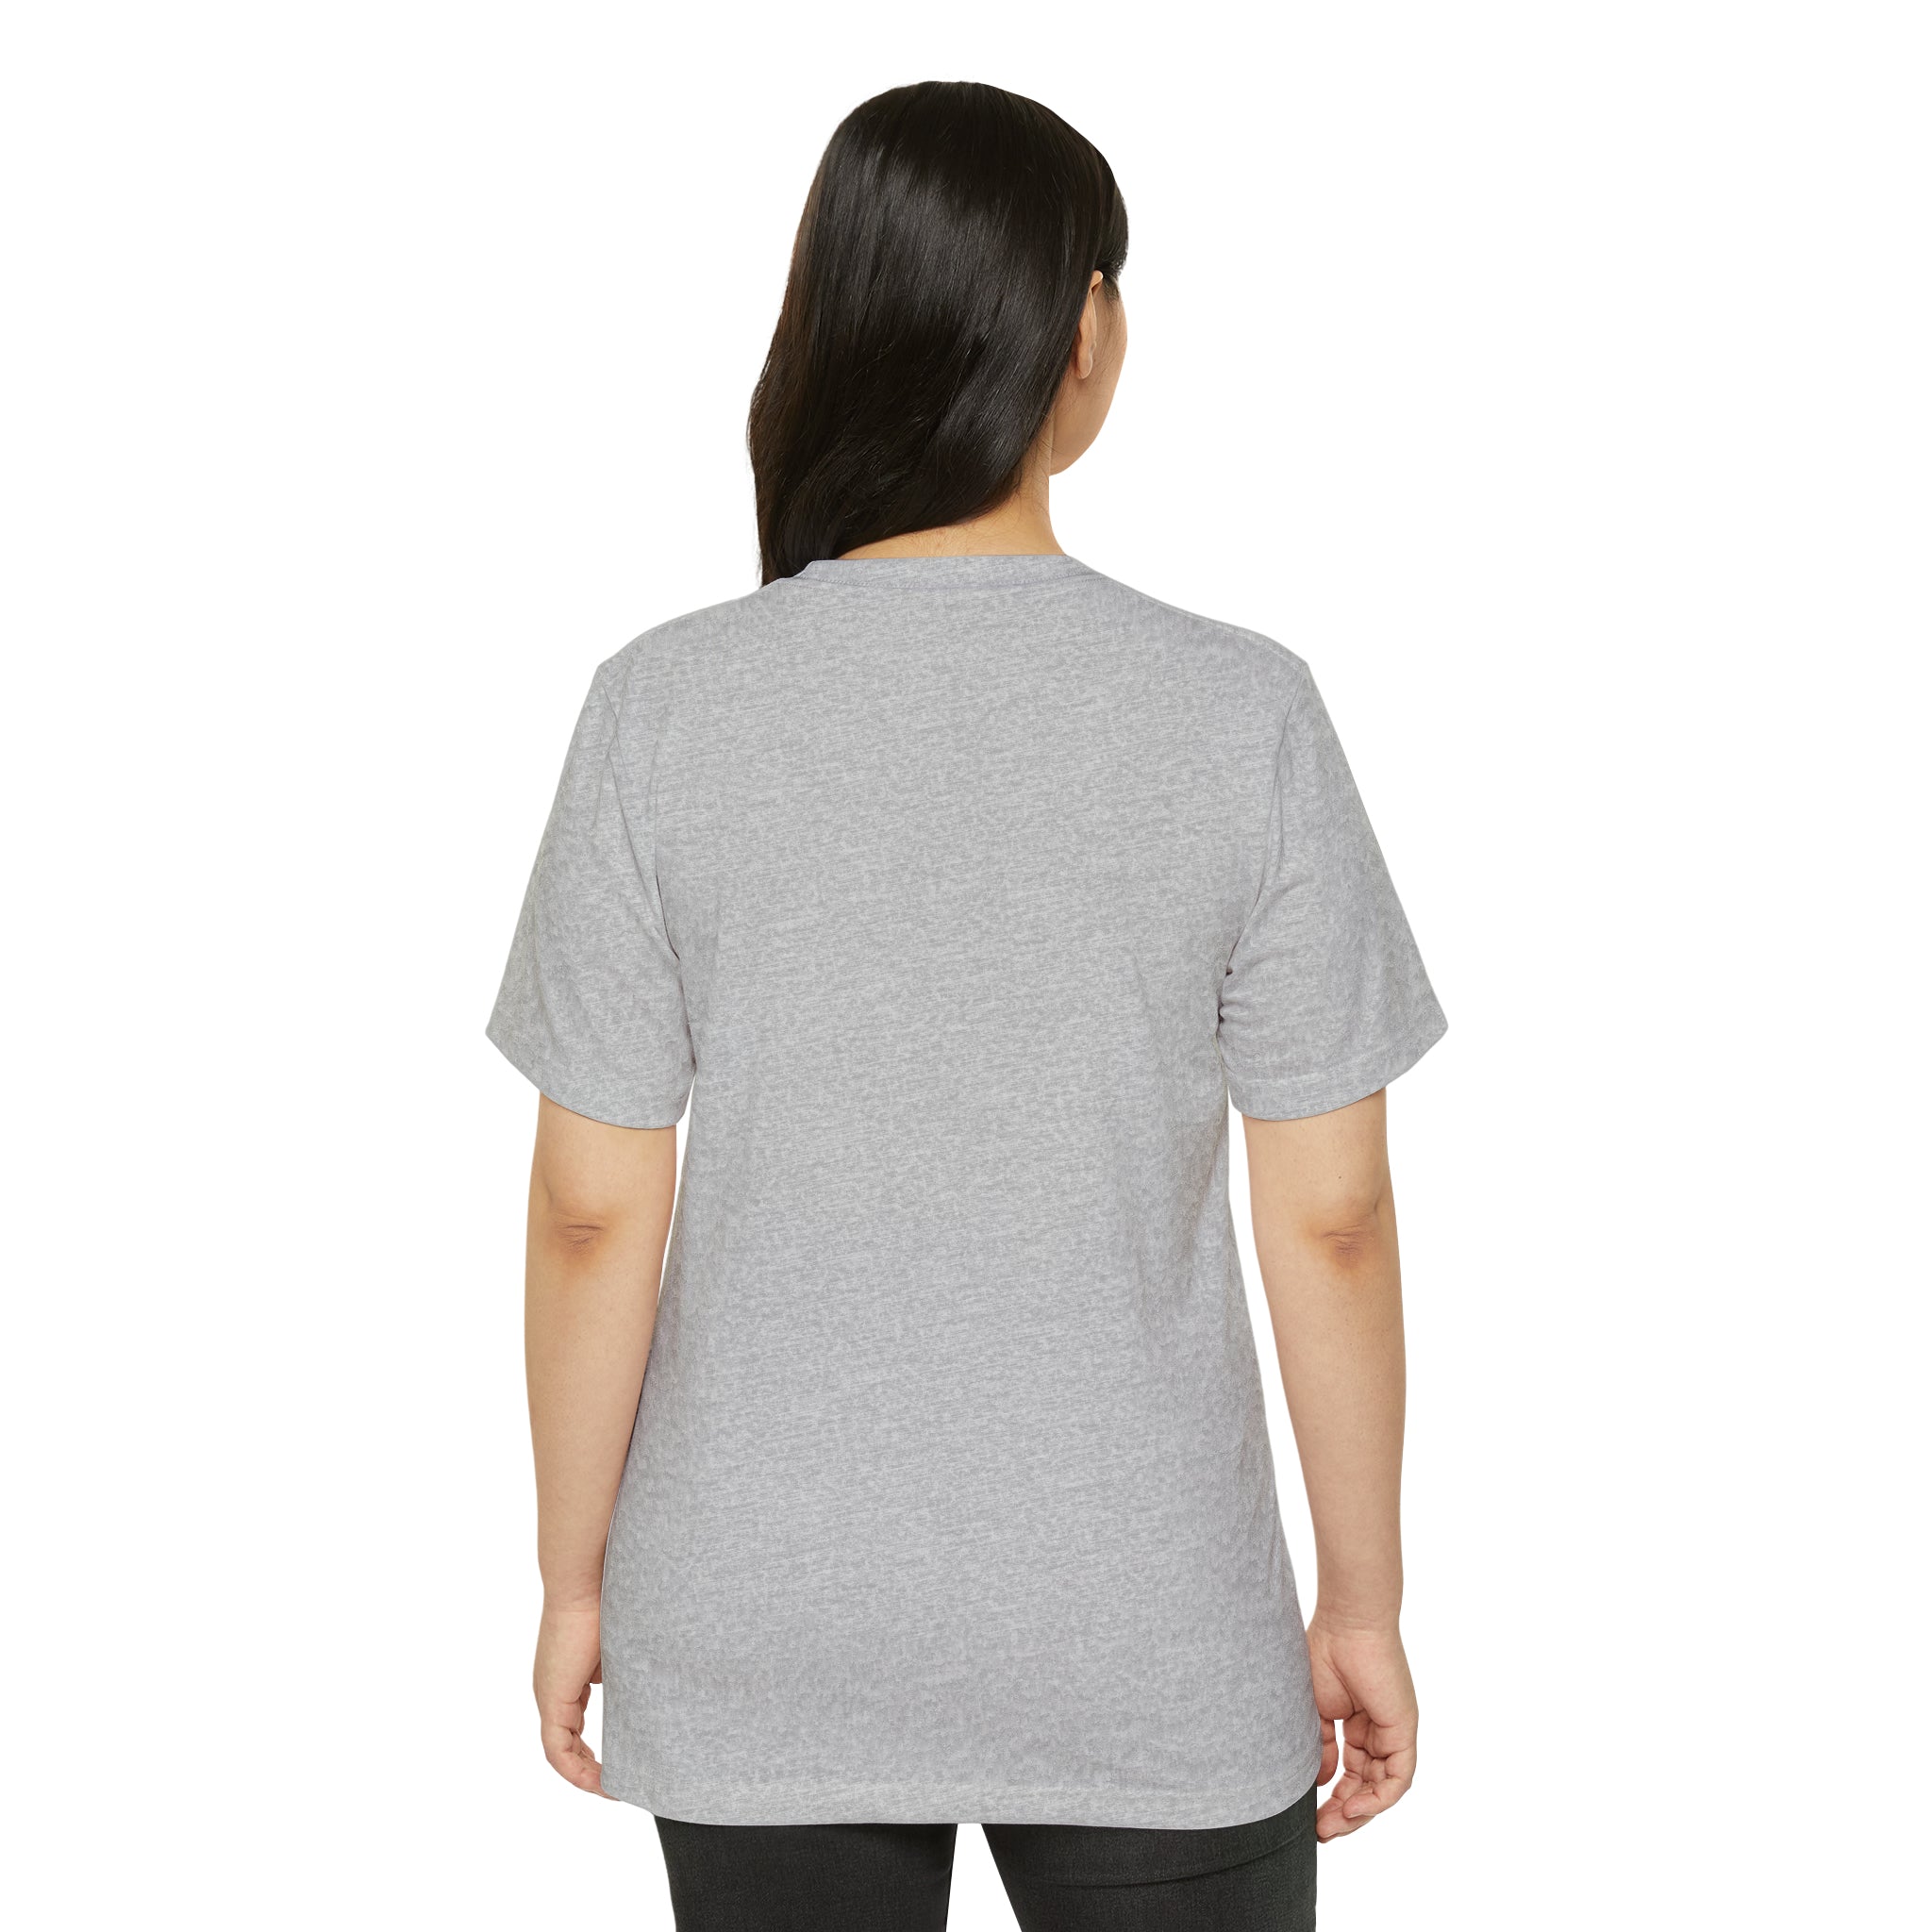 Unisex Recycled Organic T-Shirt (Min 24)